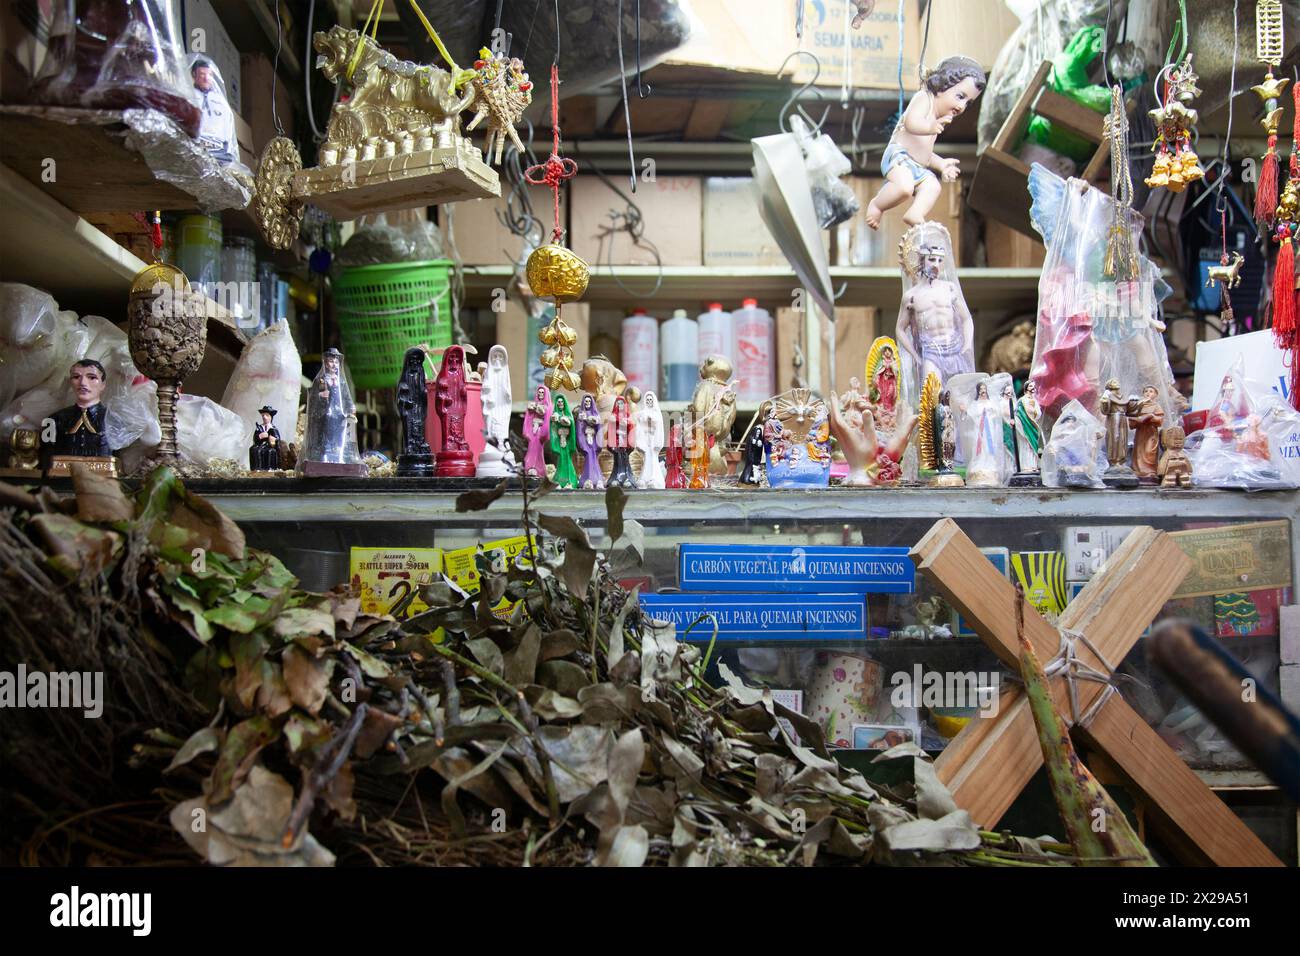 Healer Herbalist at Jamaica Market in Mexico City, Mexico Stock Photo